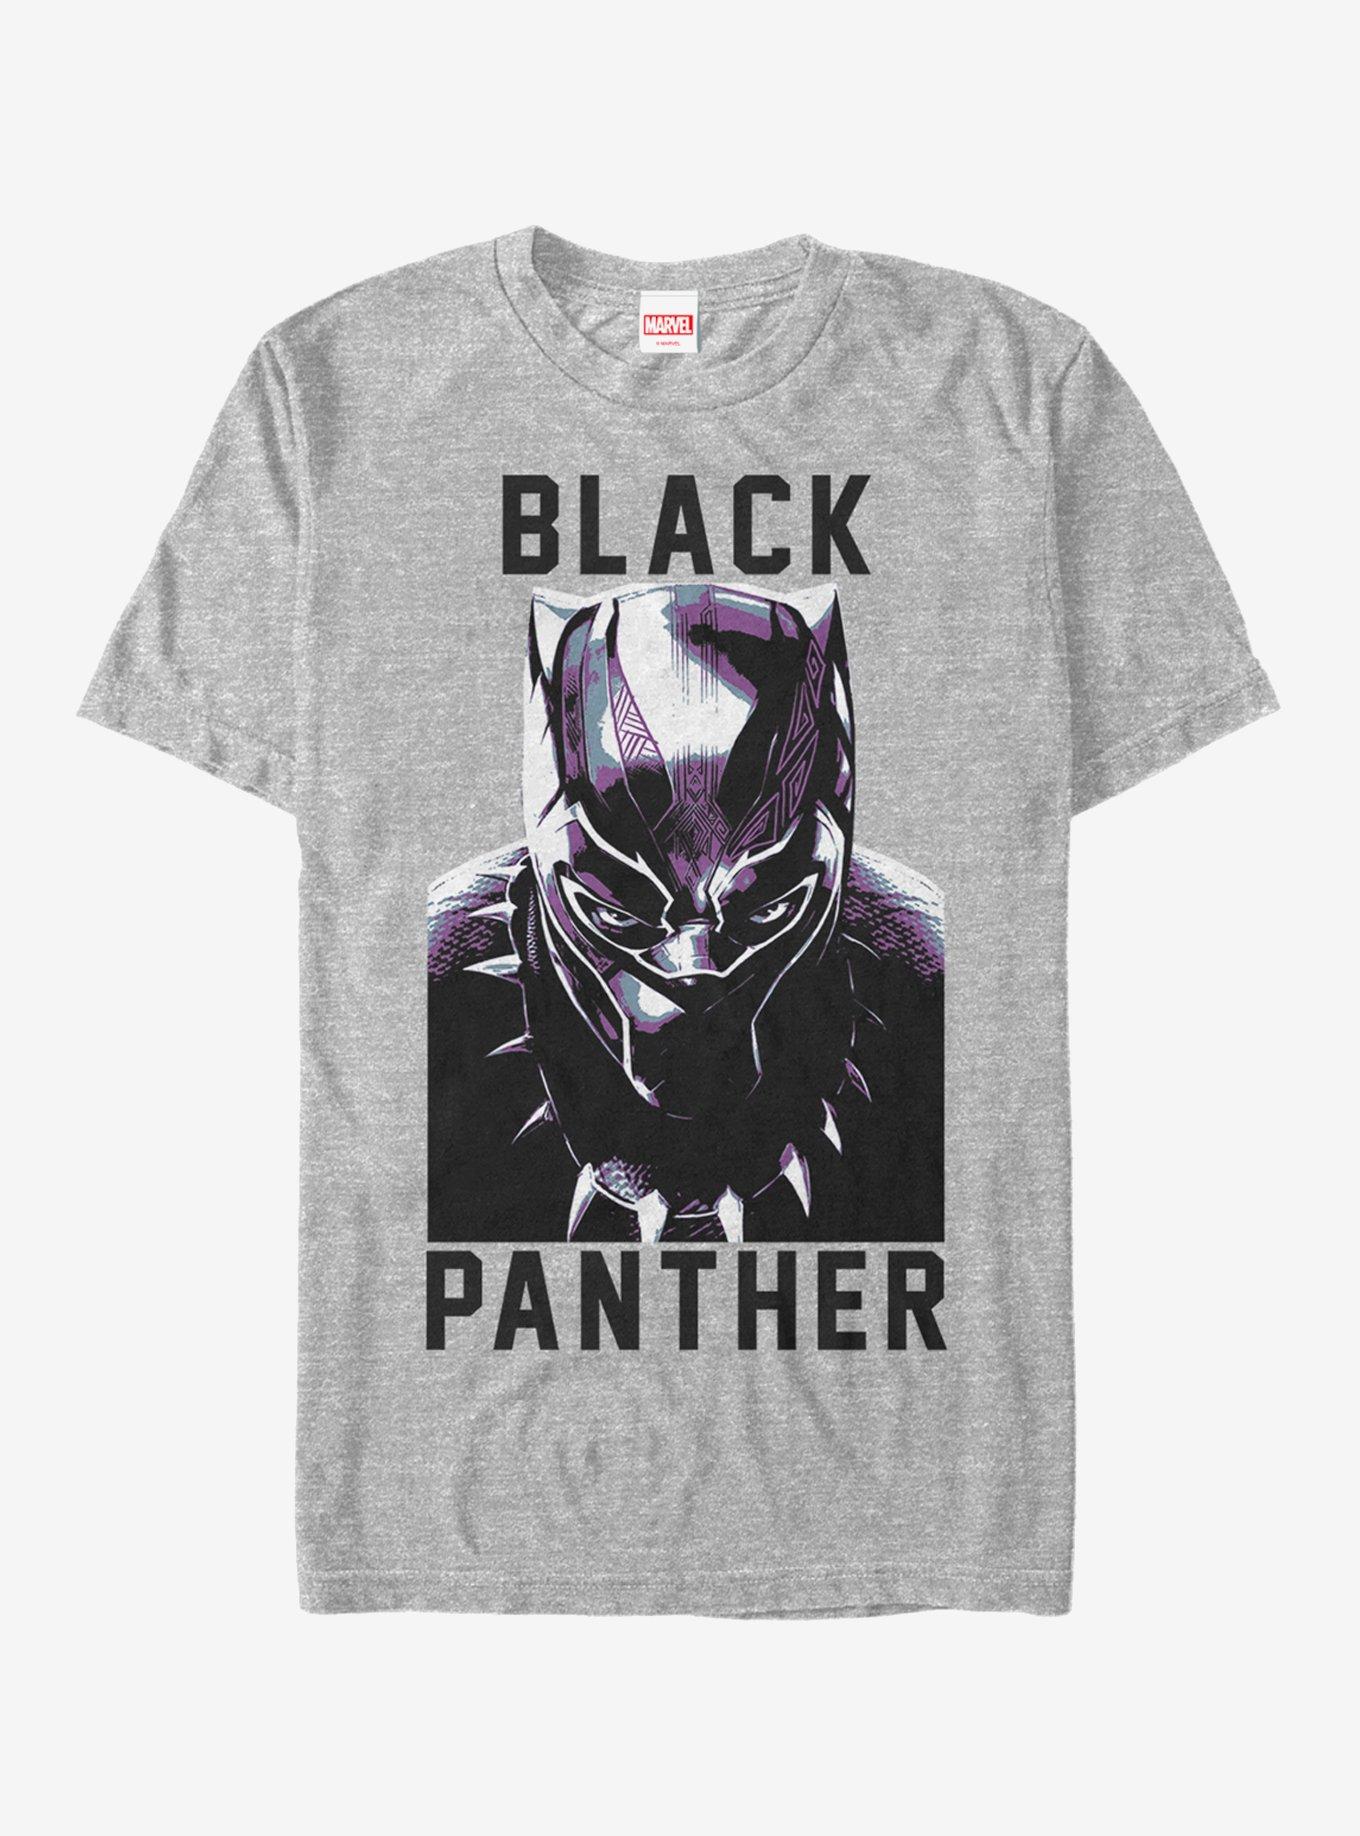 Marvel Black Panther 2018 Portrait T-Shirt, WHITE, hi-res